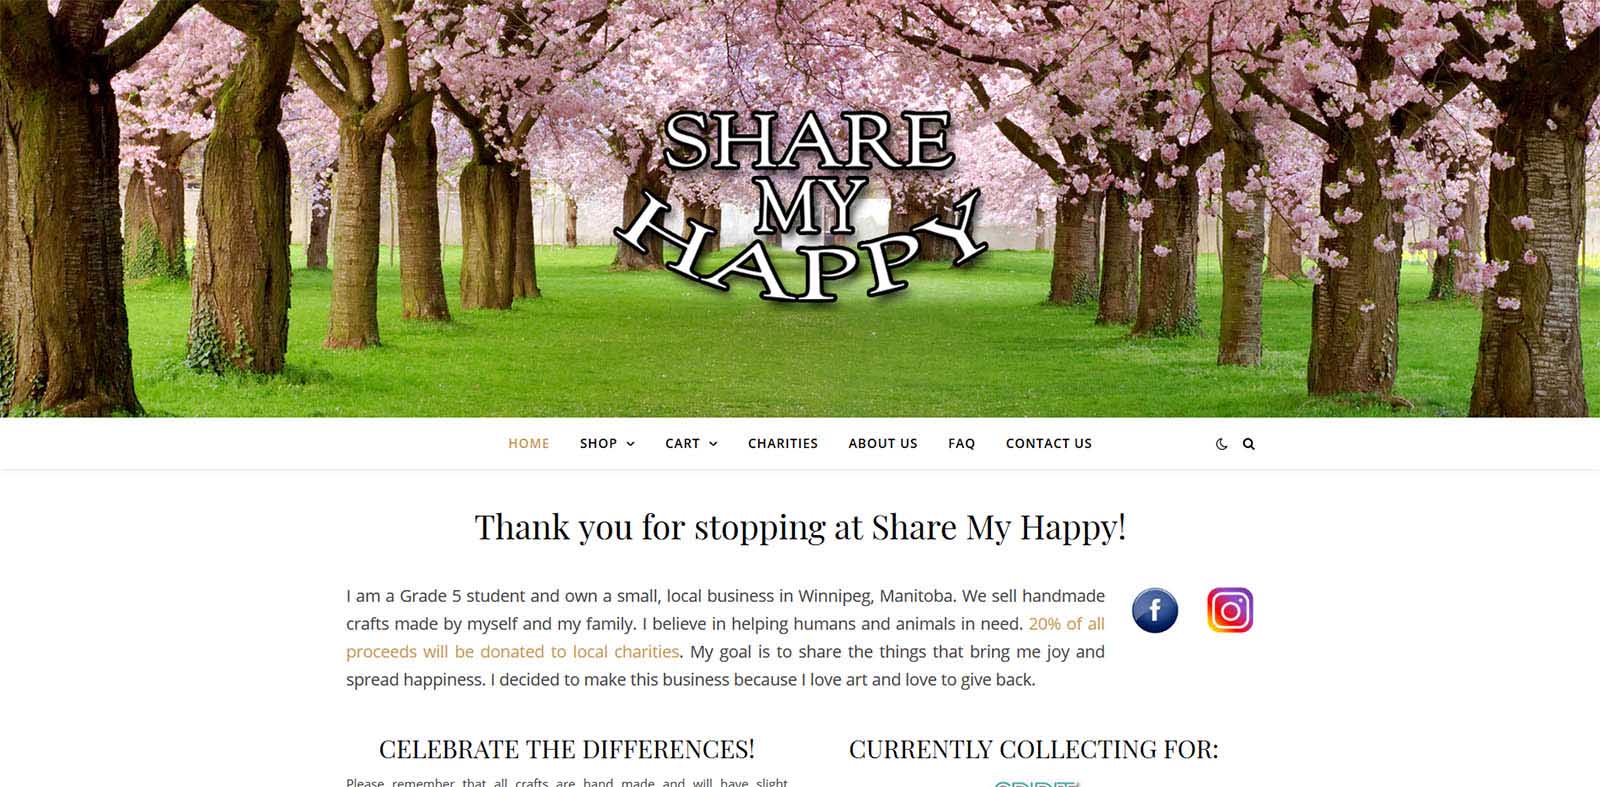 Share My Happy website